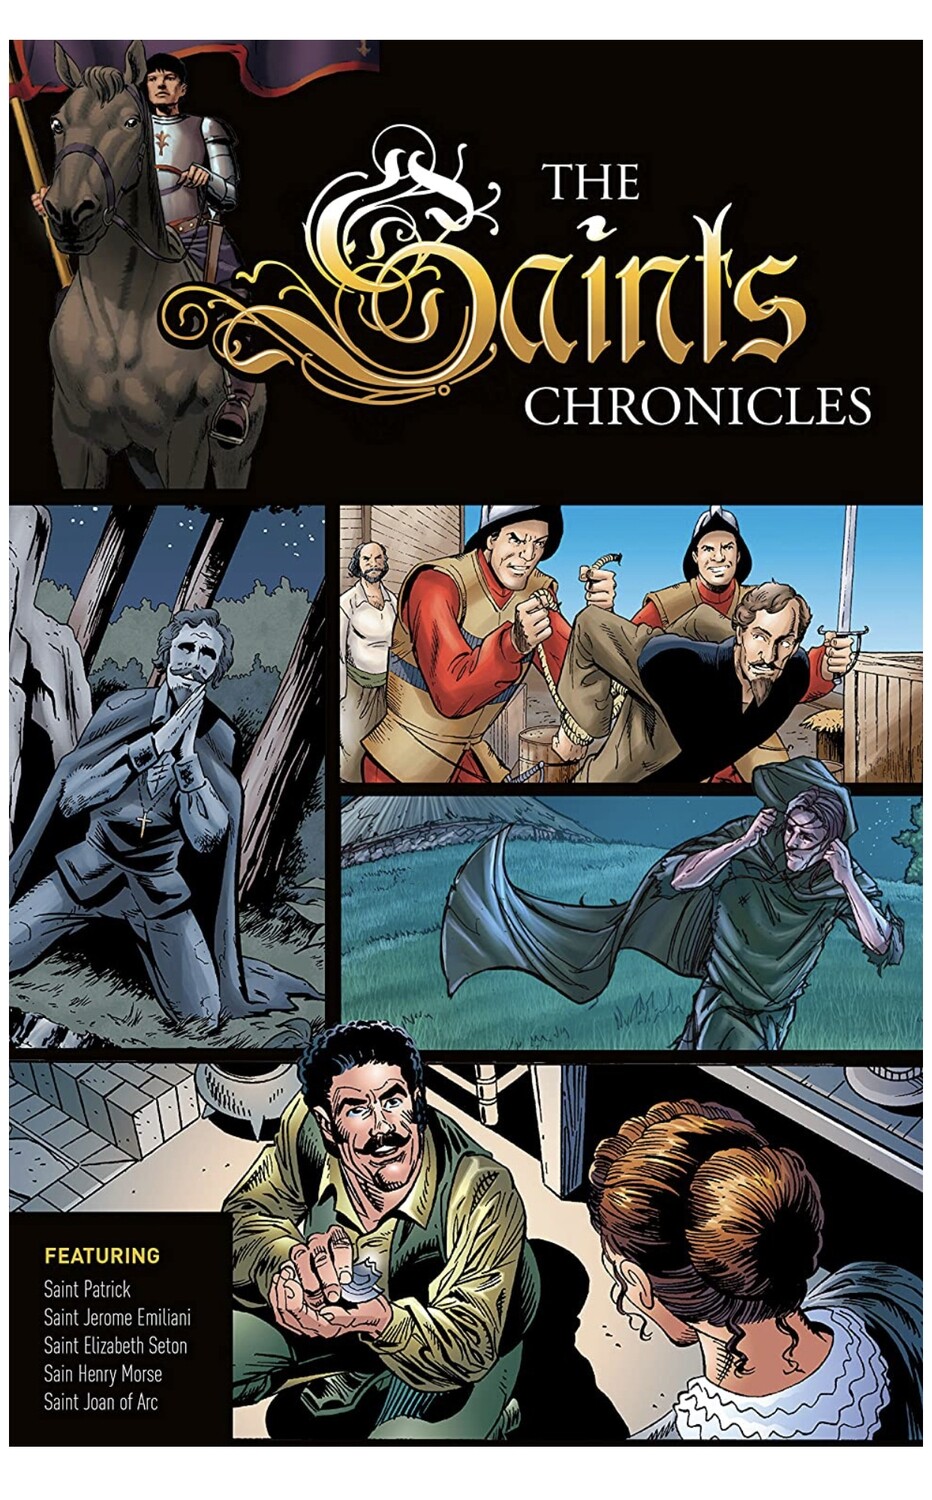 Saints Chronicles Collection 1